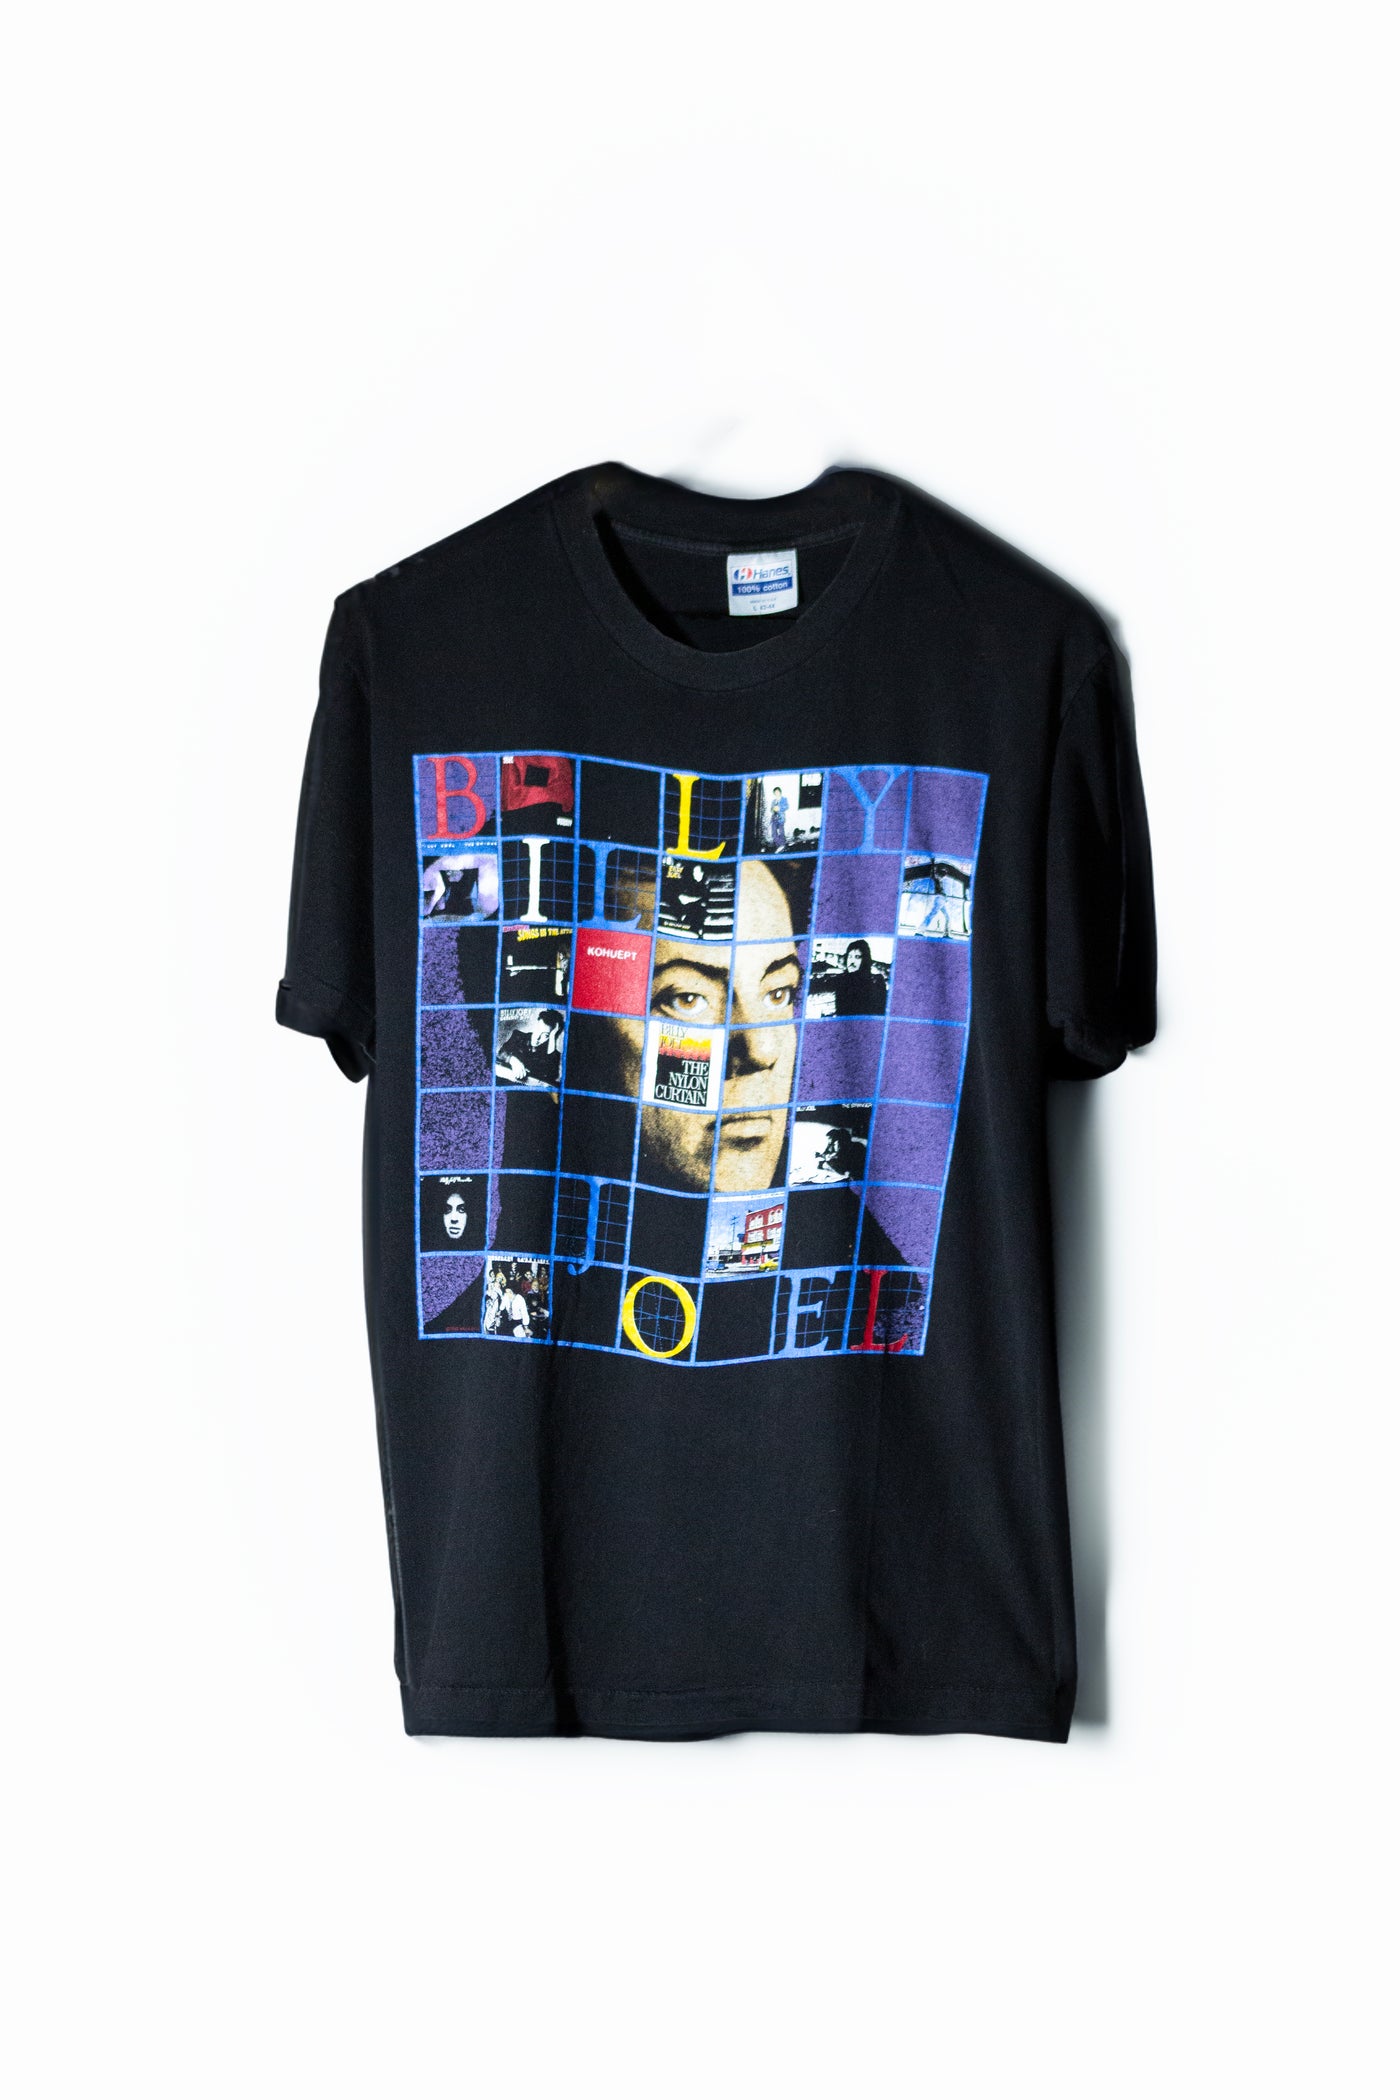 Vintage 1989 Billy Joel Storm Front Tour T-Shirt